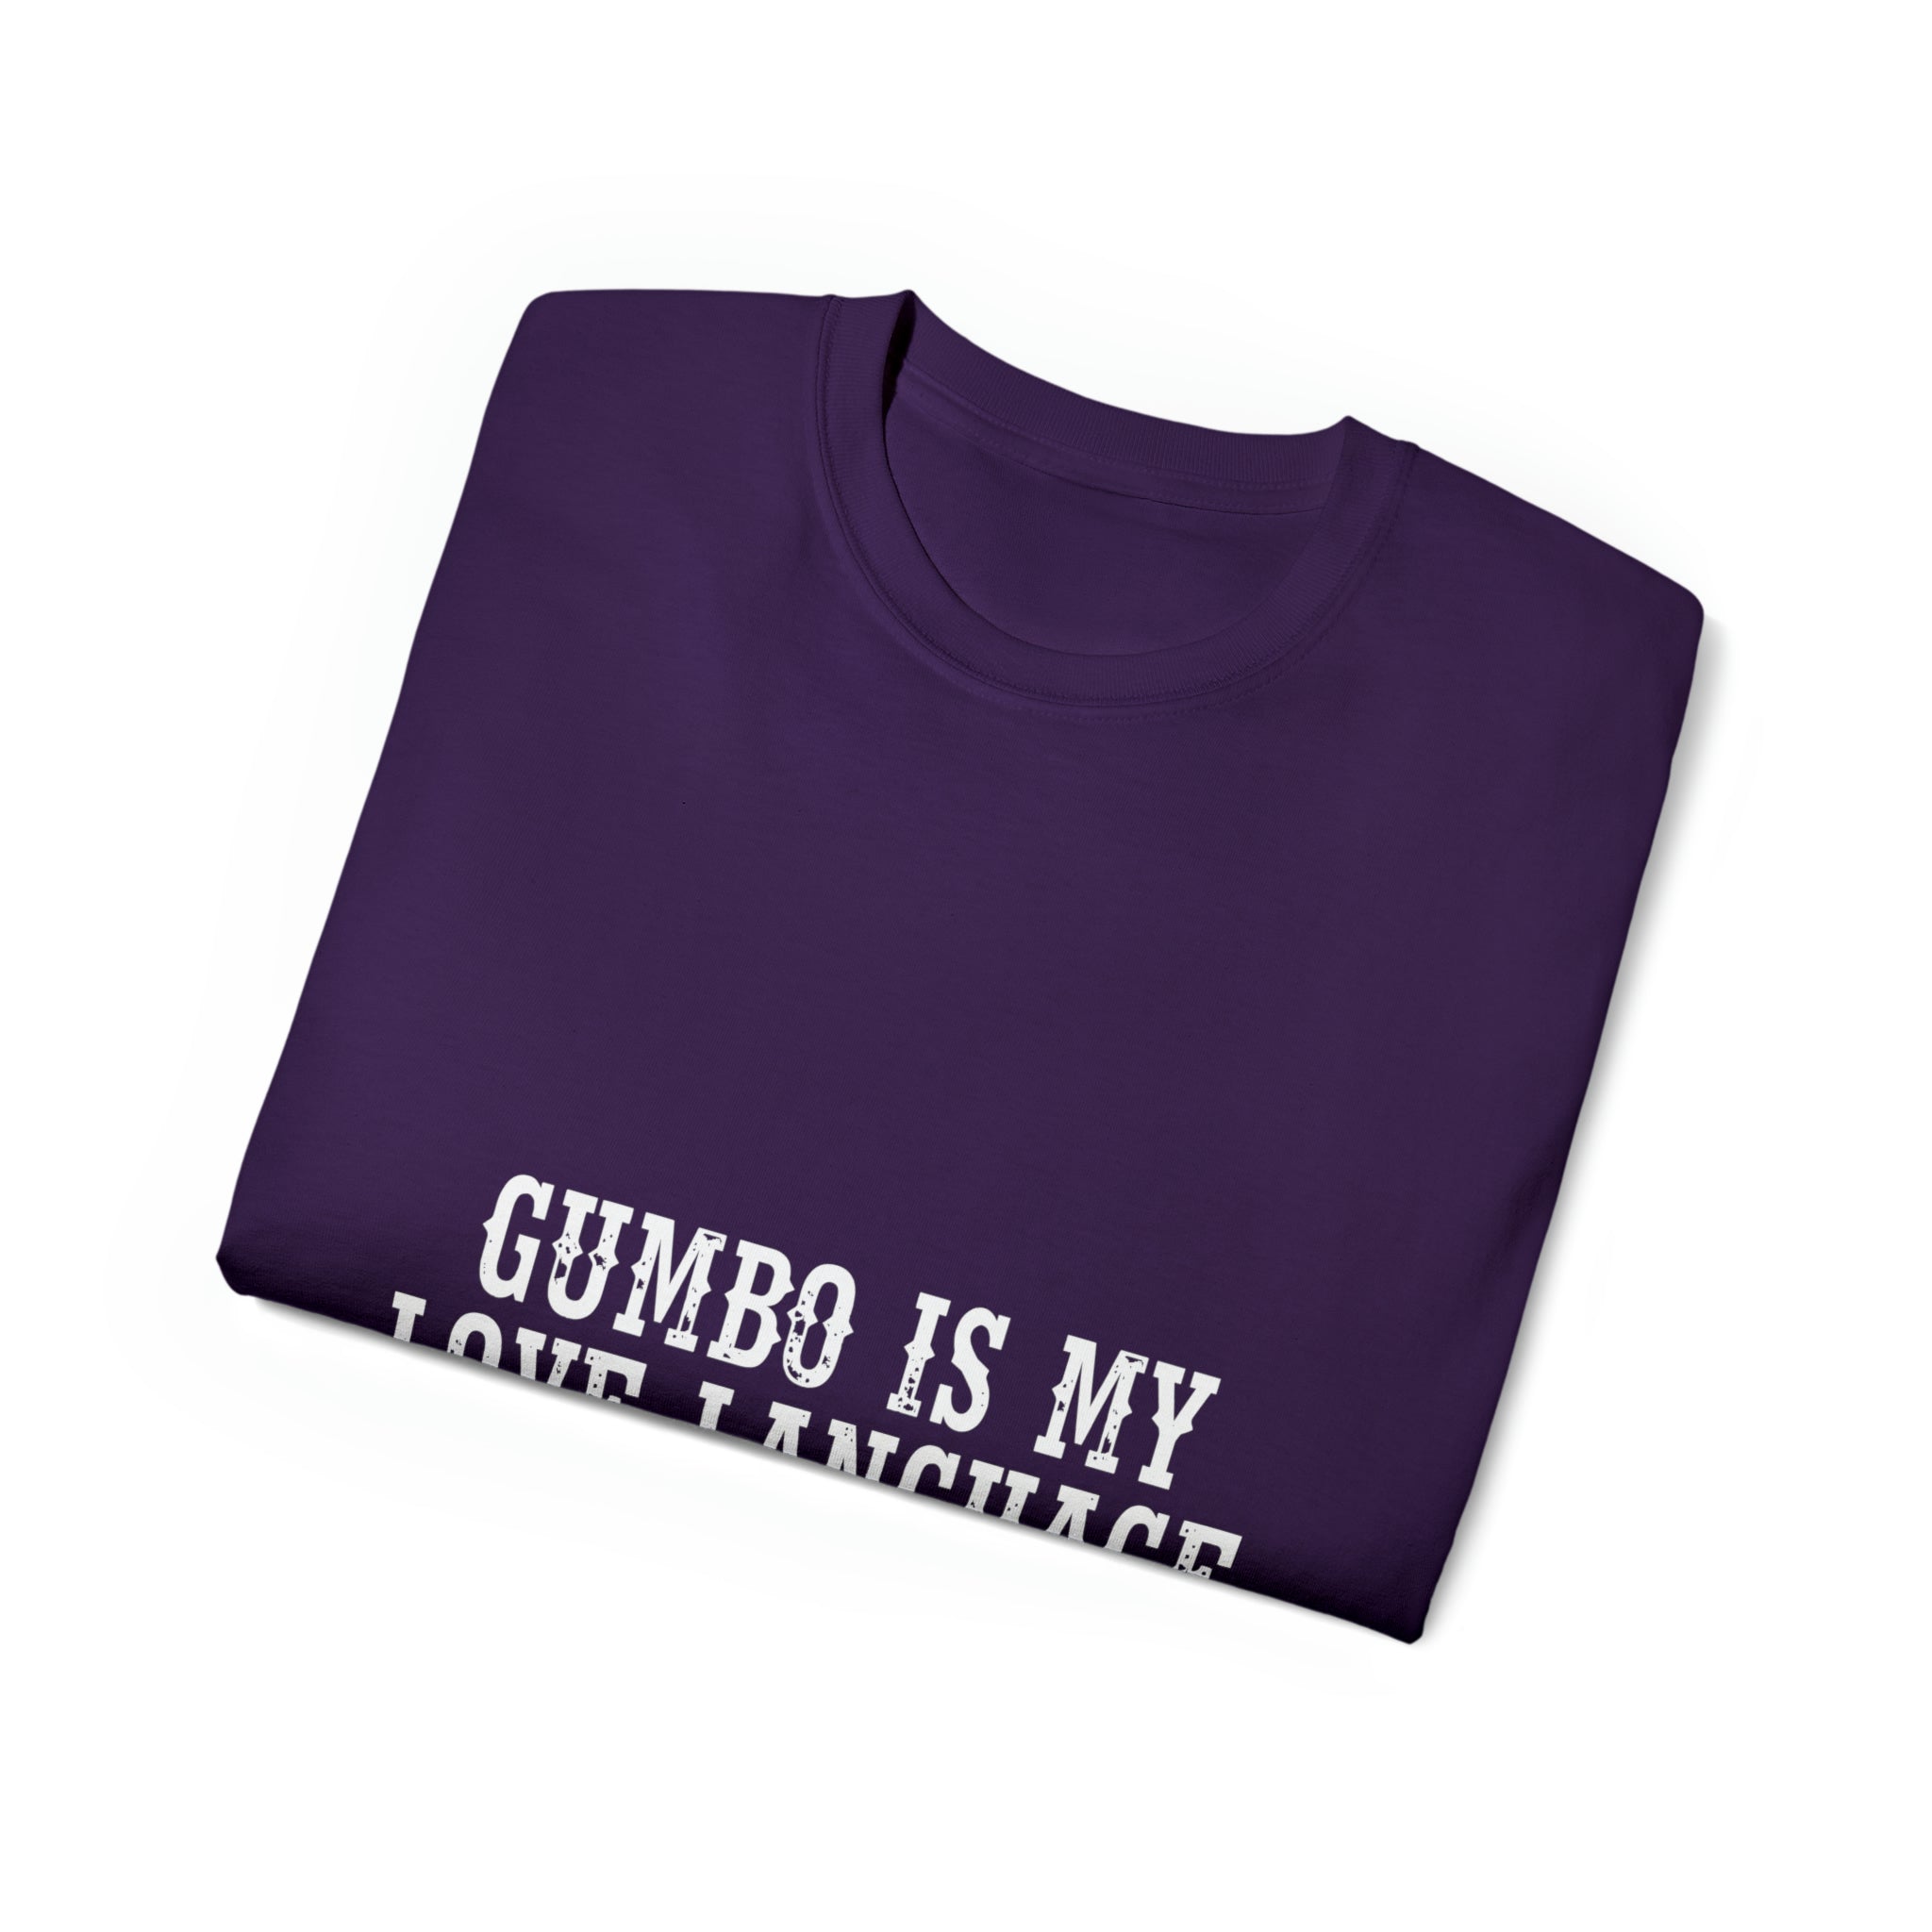 Gumbo is my Love Language